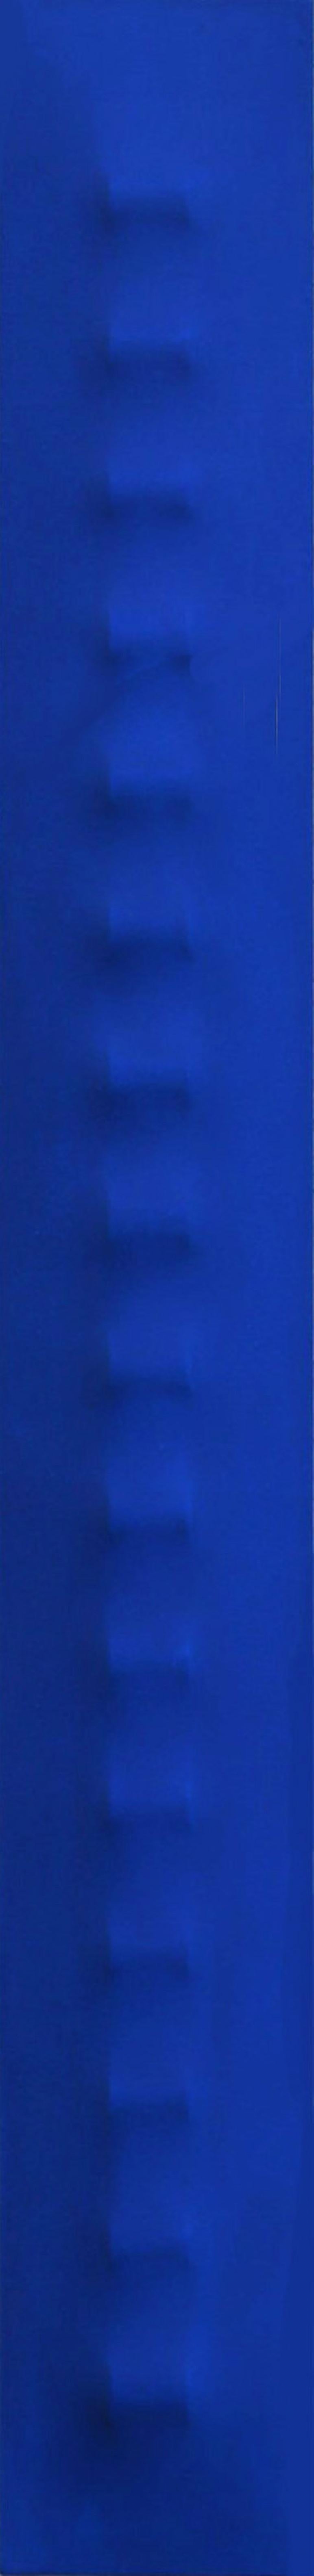 Abstract Painting Len Klikunas - Peinture murale abstraite tridimensionnelle bleue Slims CNB